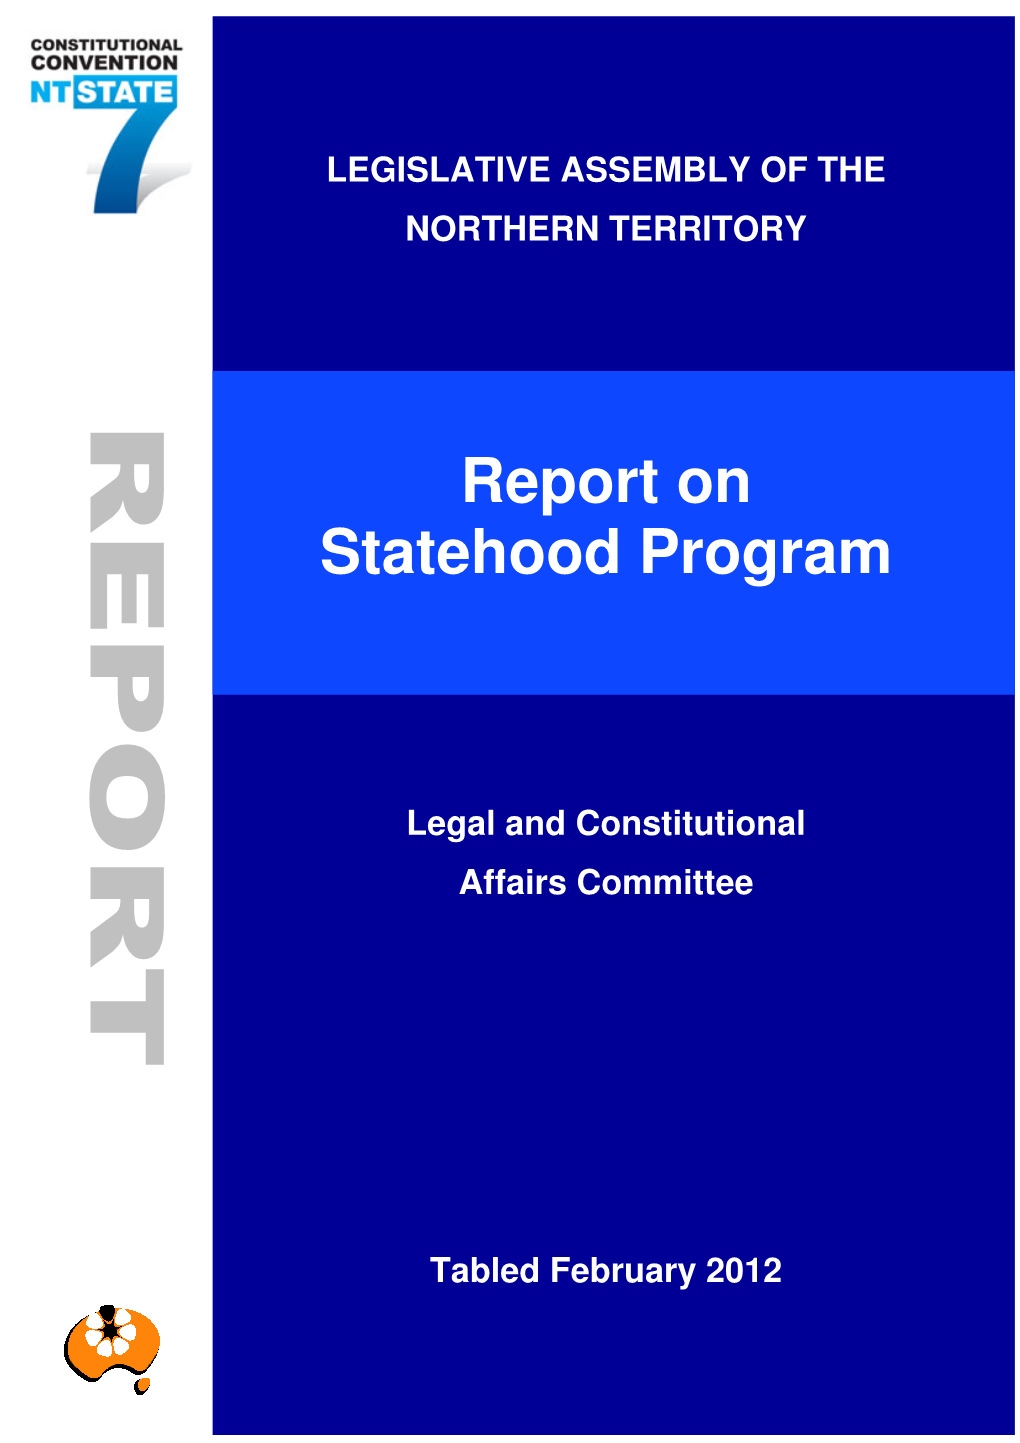 Report on Statehood Program